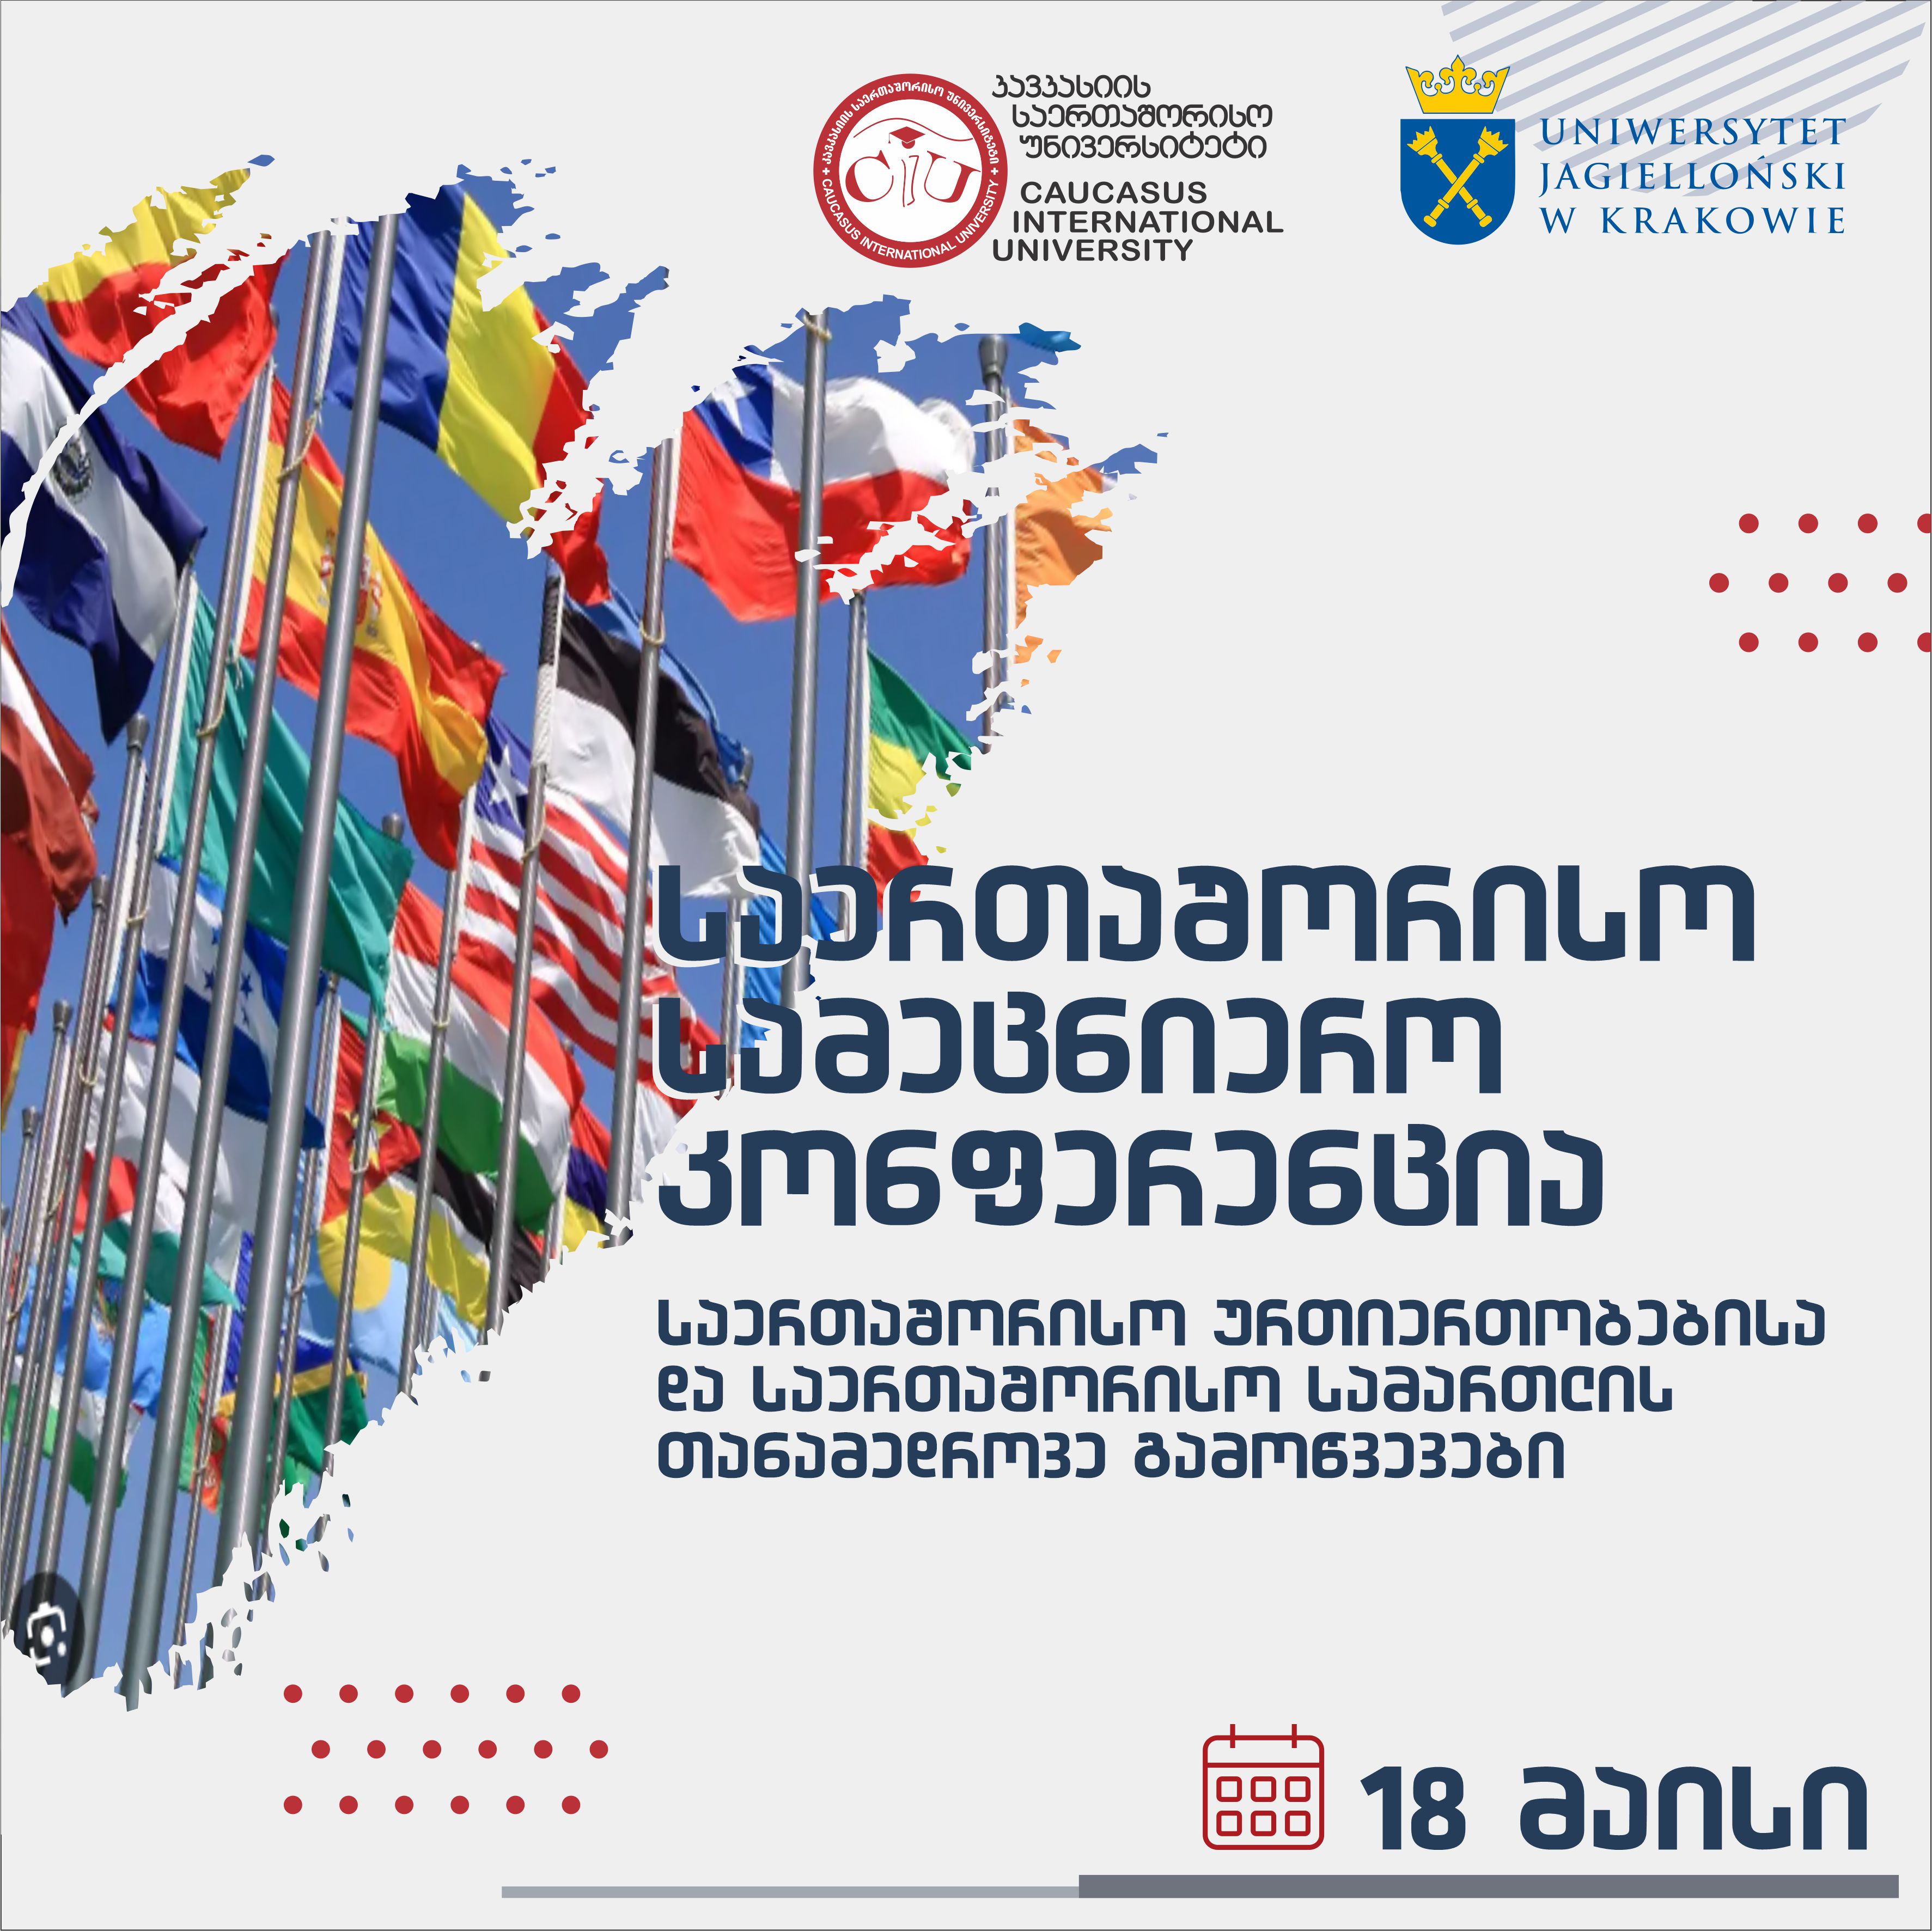 Registration for International Scientific Conference